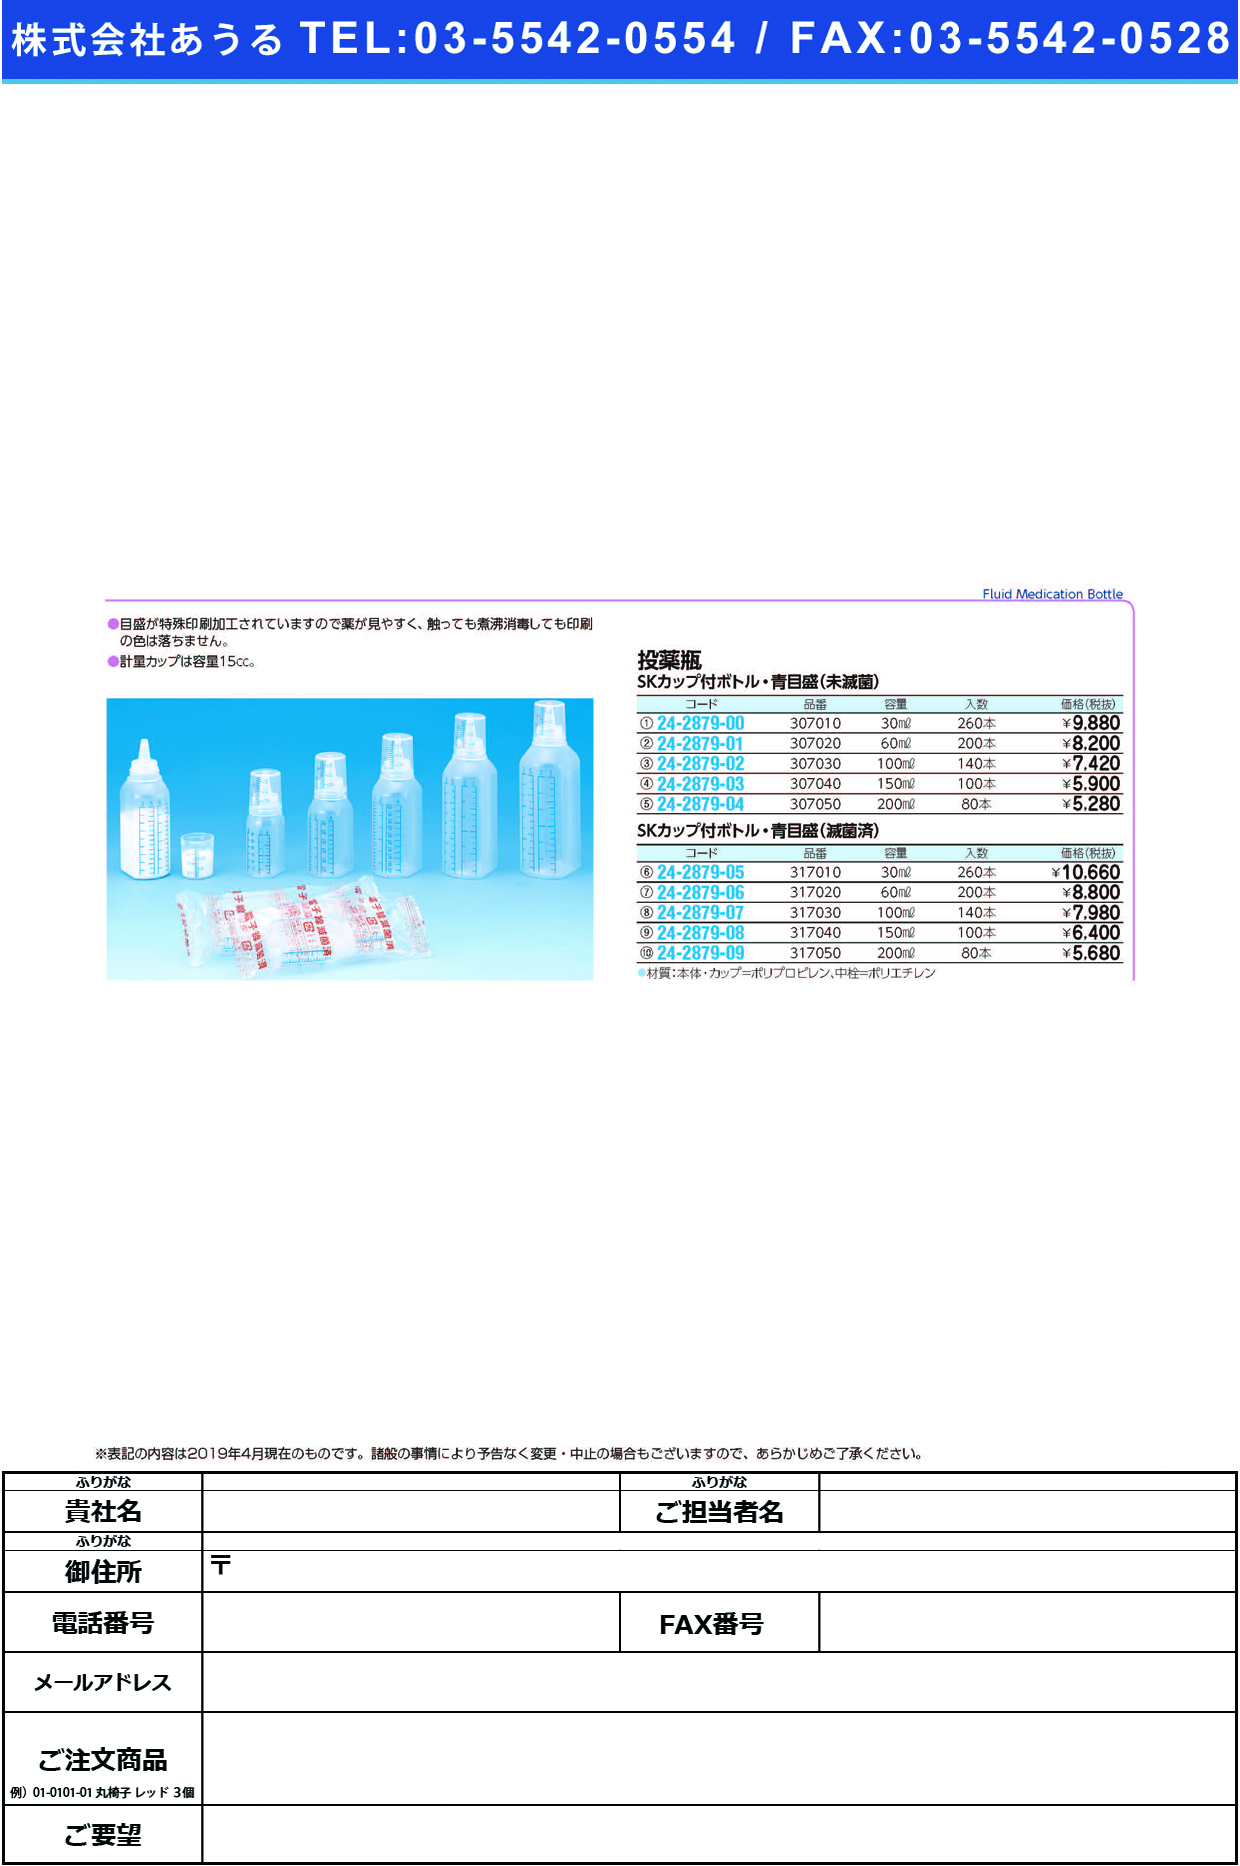 (24-2879-08)ＳＫカップ付ボトル青目盛（滅菌済） 150ML(100ﾎﾝｲﾘ) SKｶｯﾌﾟﾂｷﾎﾞﾄﾙﾒｯｷﾝｽﾞﾐ【1袋単位】【2019年カタログ商品】